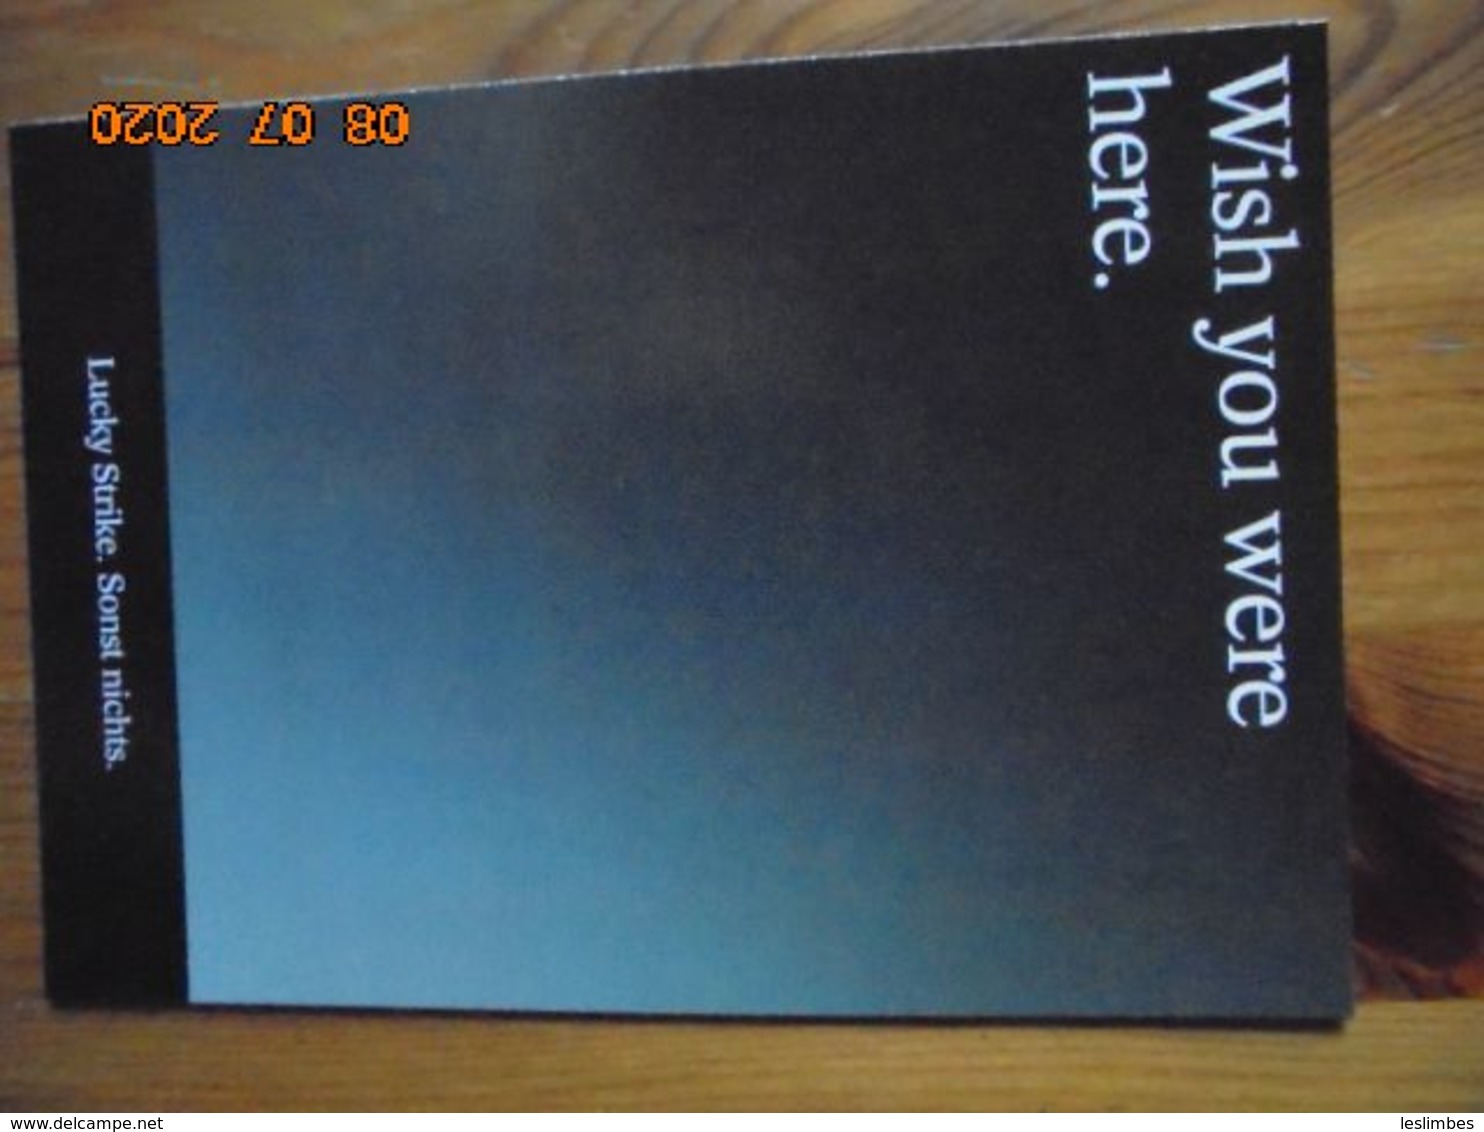 Carte Postale Publicitaire Allemand (Taschen 1996) 16,3 X 11,4 Cm. Lucky Strike. Sonst Nichts. "Wish You Were Here" 1994 - Advertising Items